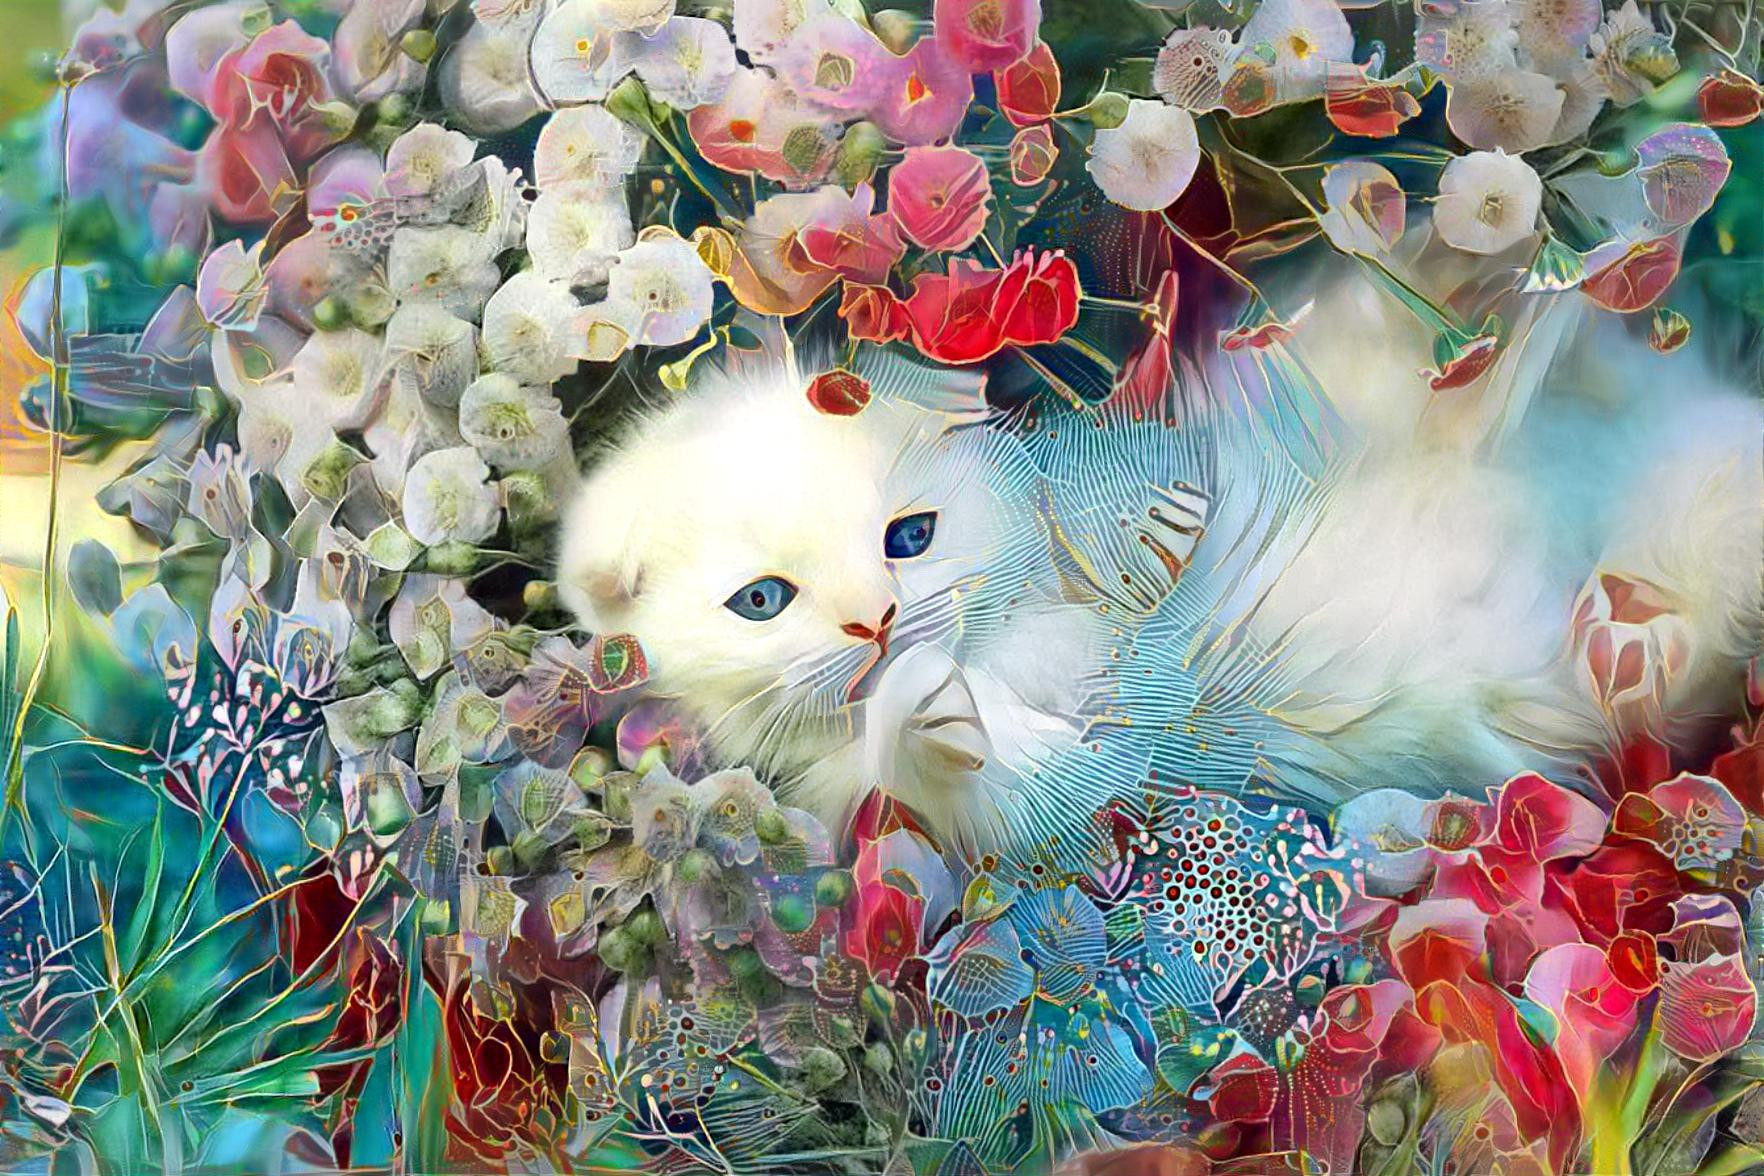 Deep Dream inspired by Kitten’n’Flowers